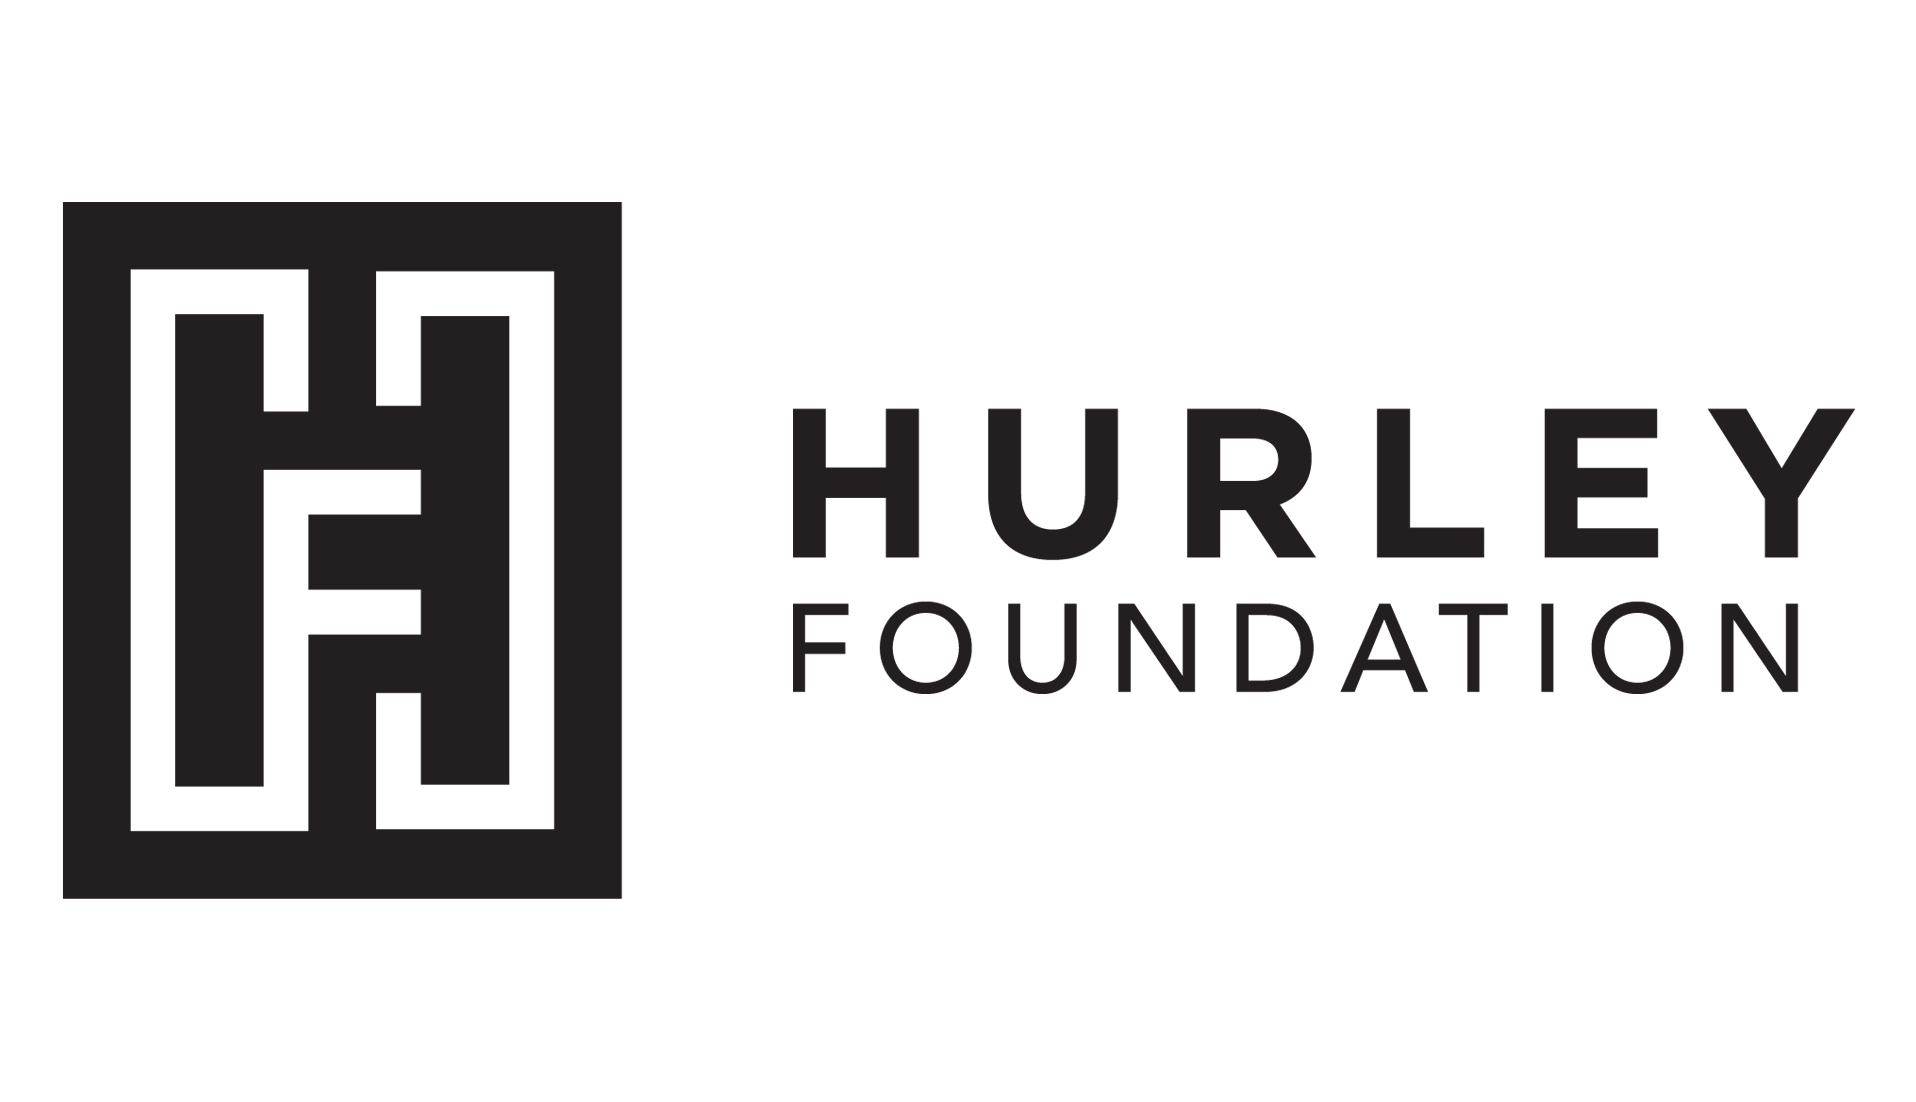 Hurley Foundation